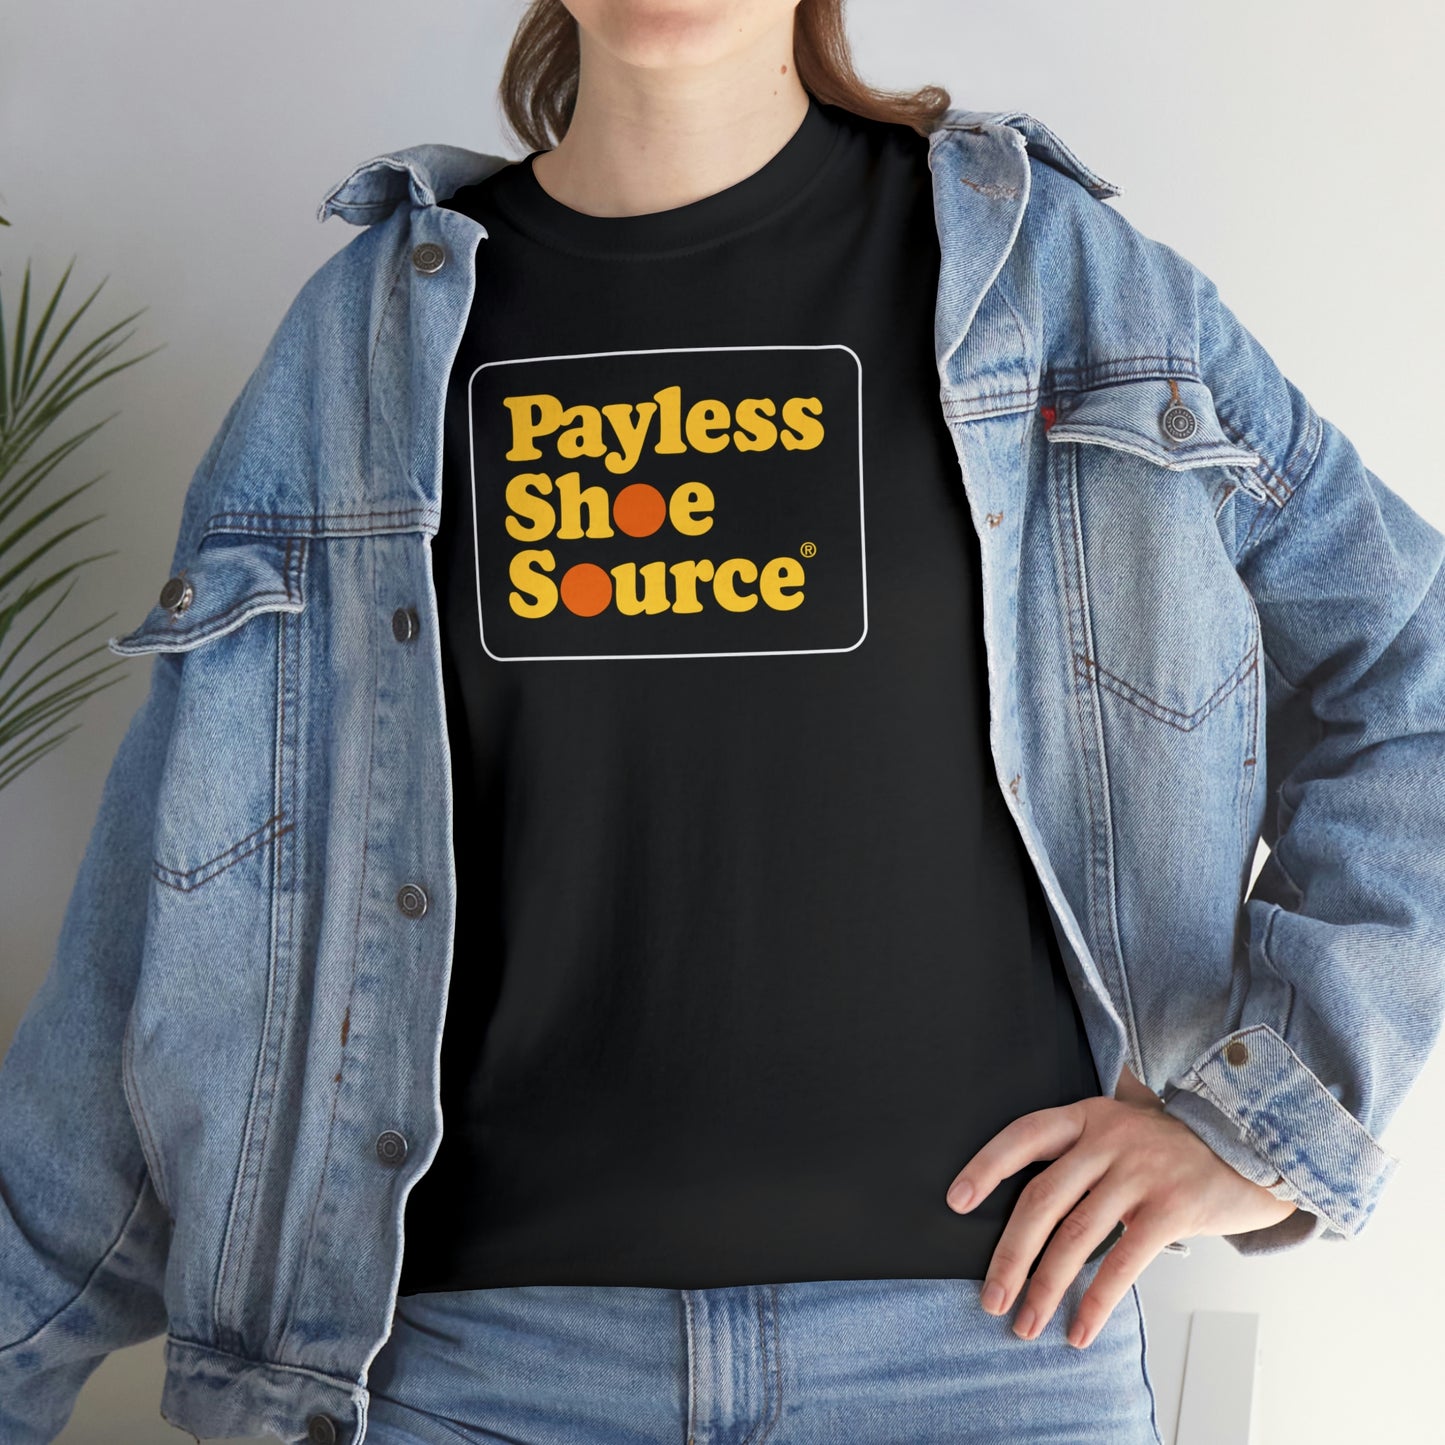 Payless Shoe Source T-Shirt